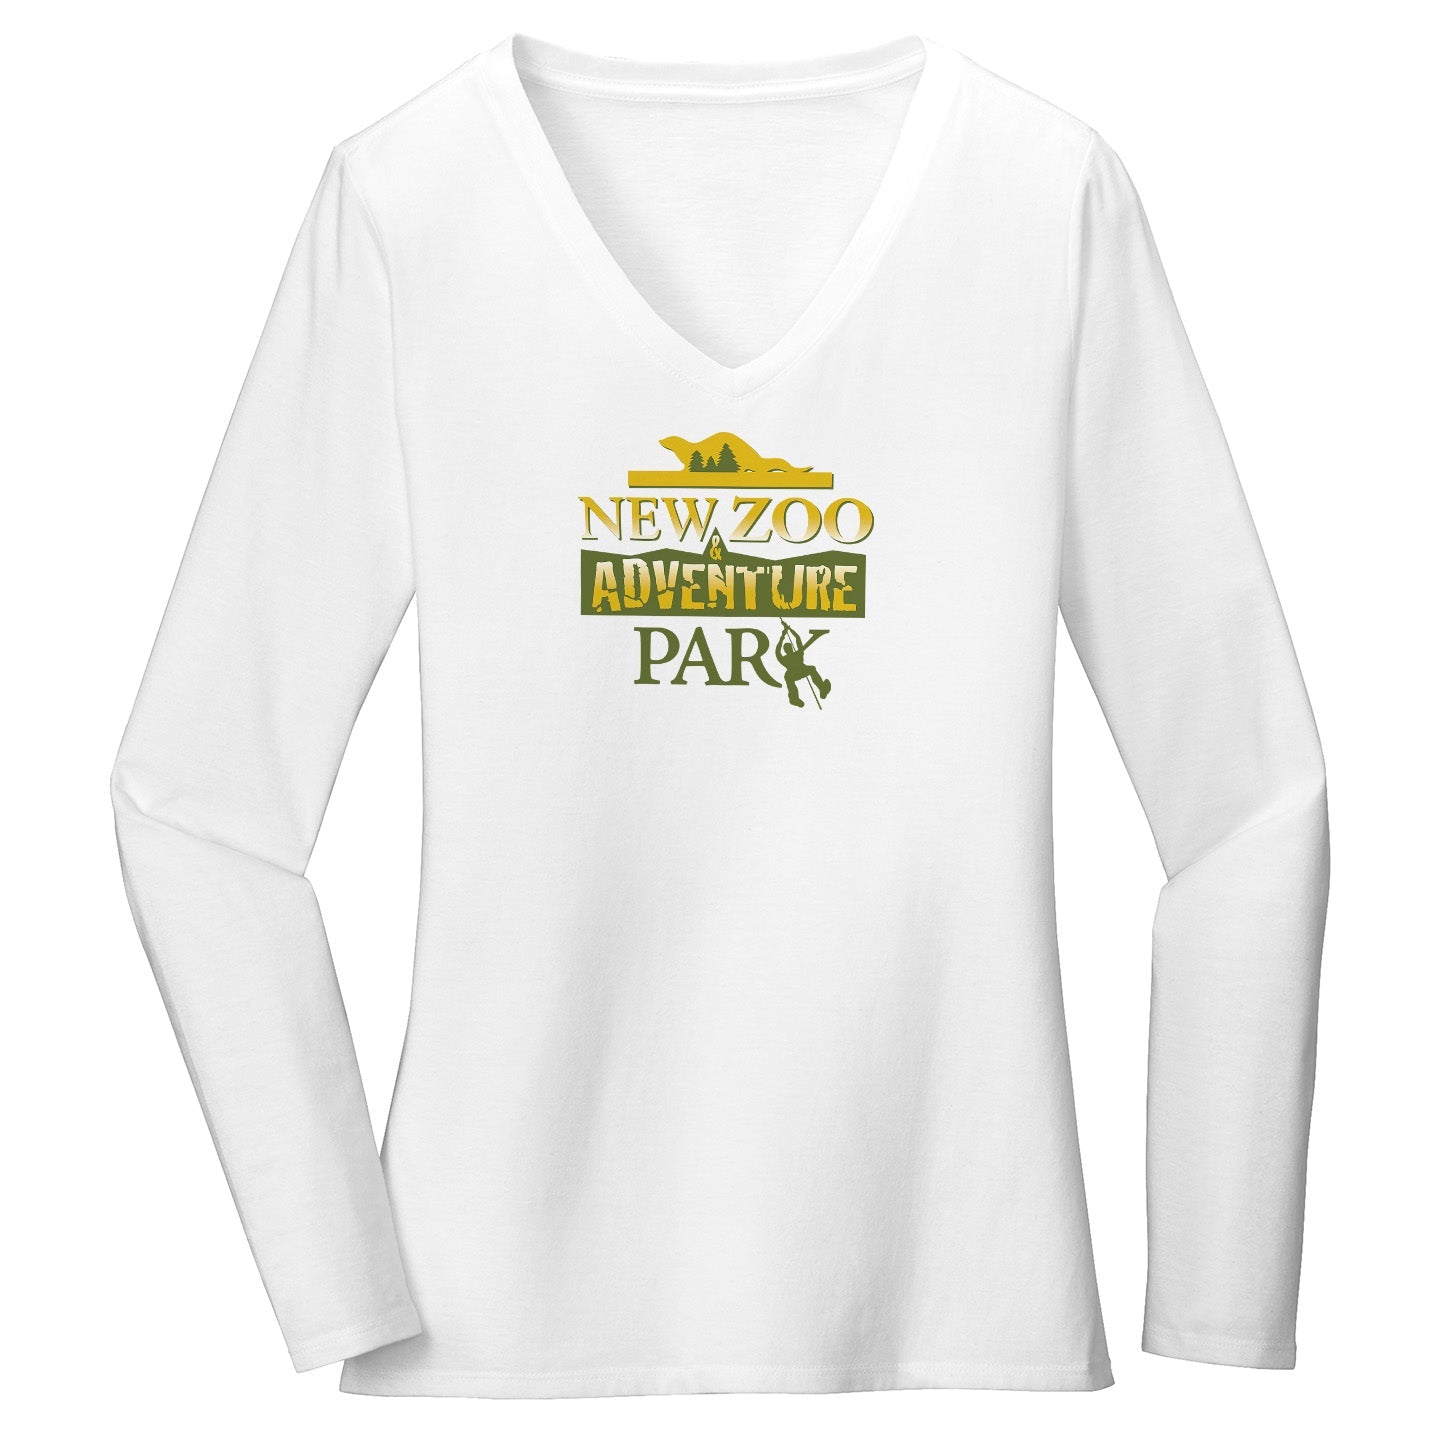 NEW Zoo and Adventure Park Logo - Women's V-Neck Long Sleeve T-Shirt